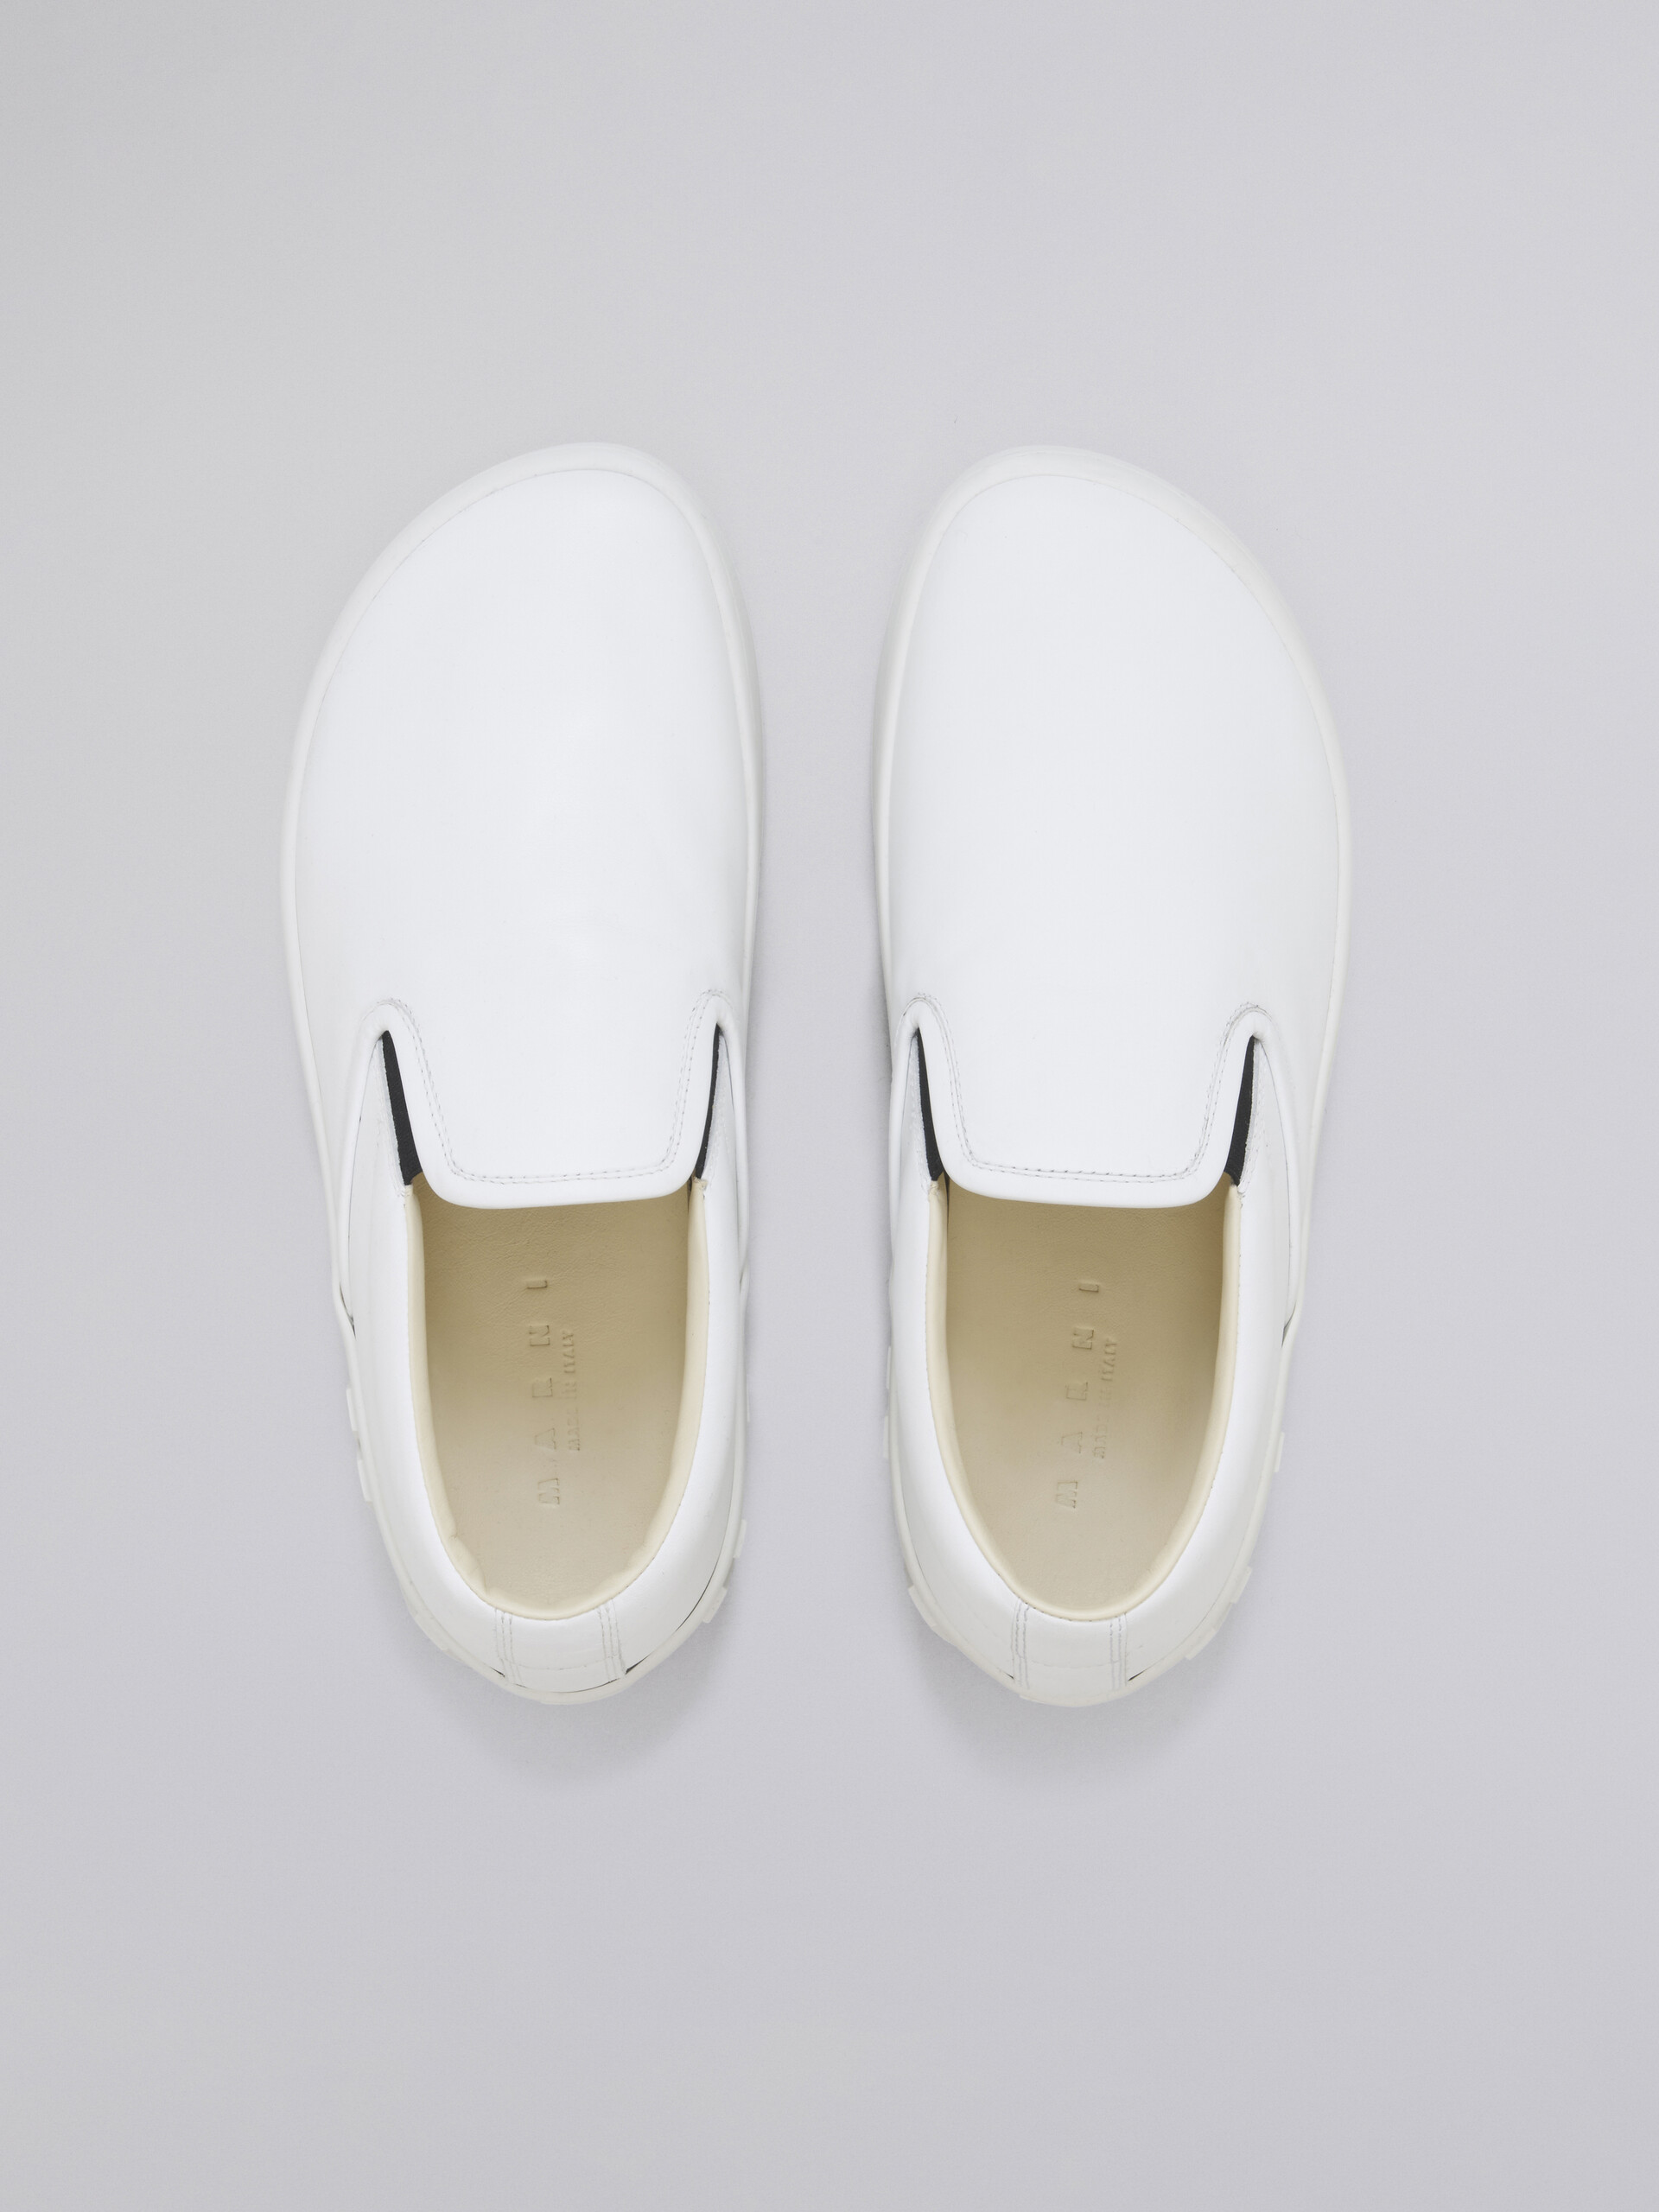 Sneakers en cuir de veau blanc avec grand logo Marni en relief - Sneakers - Image 4